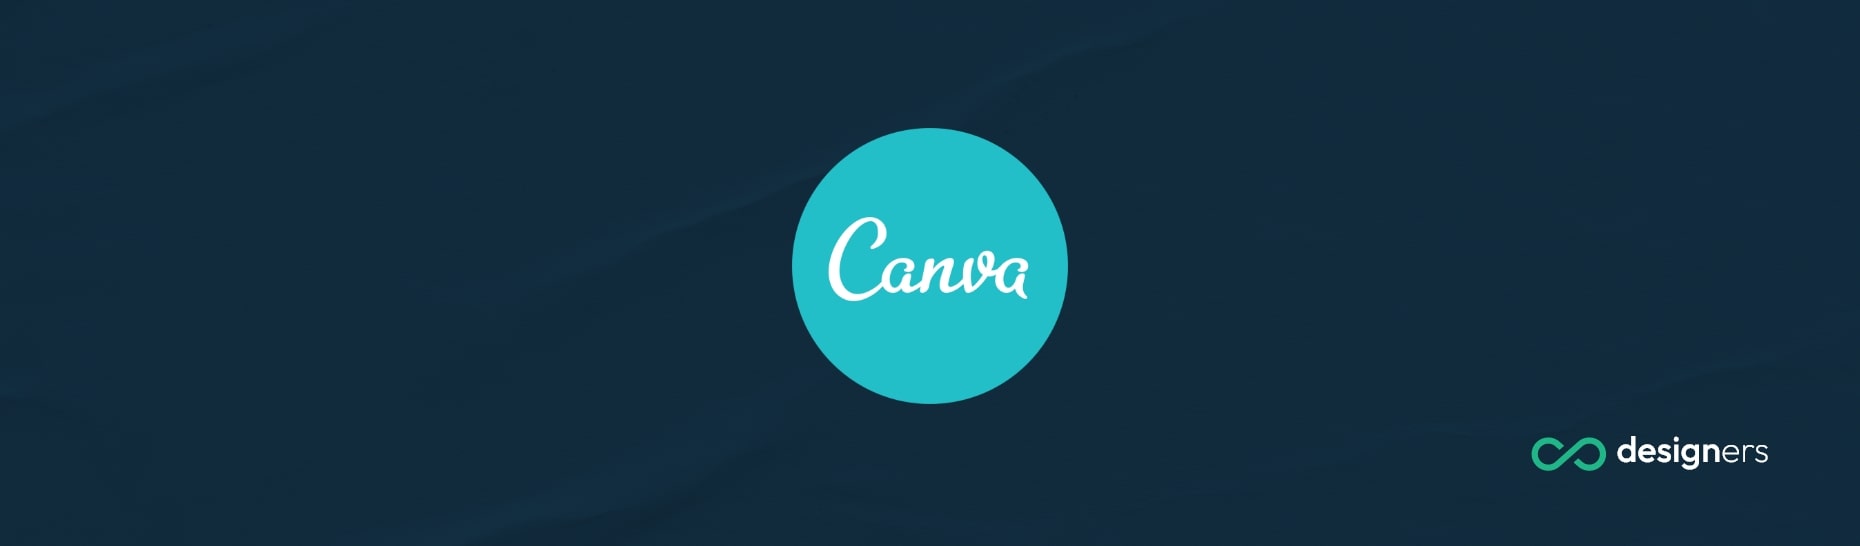 Is Canva Good for Branding?